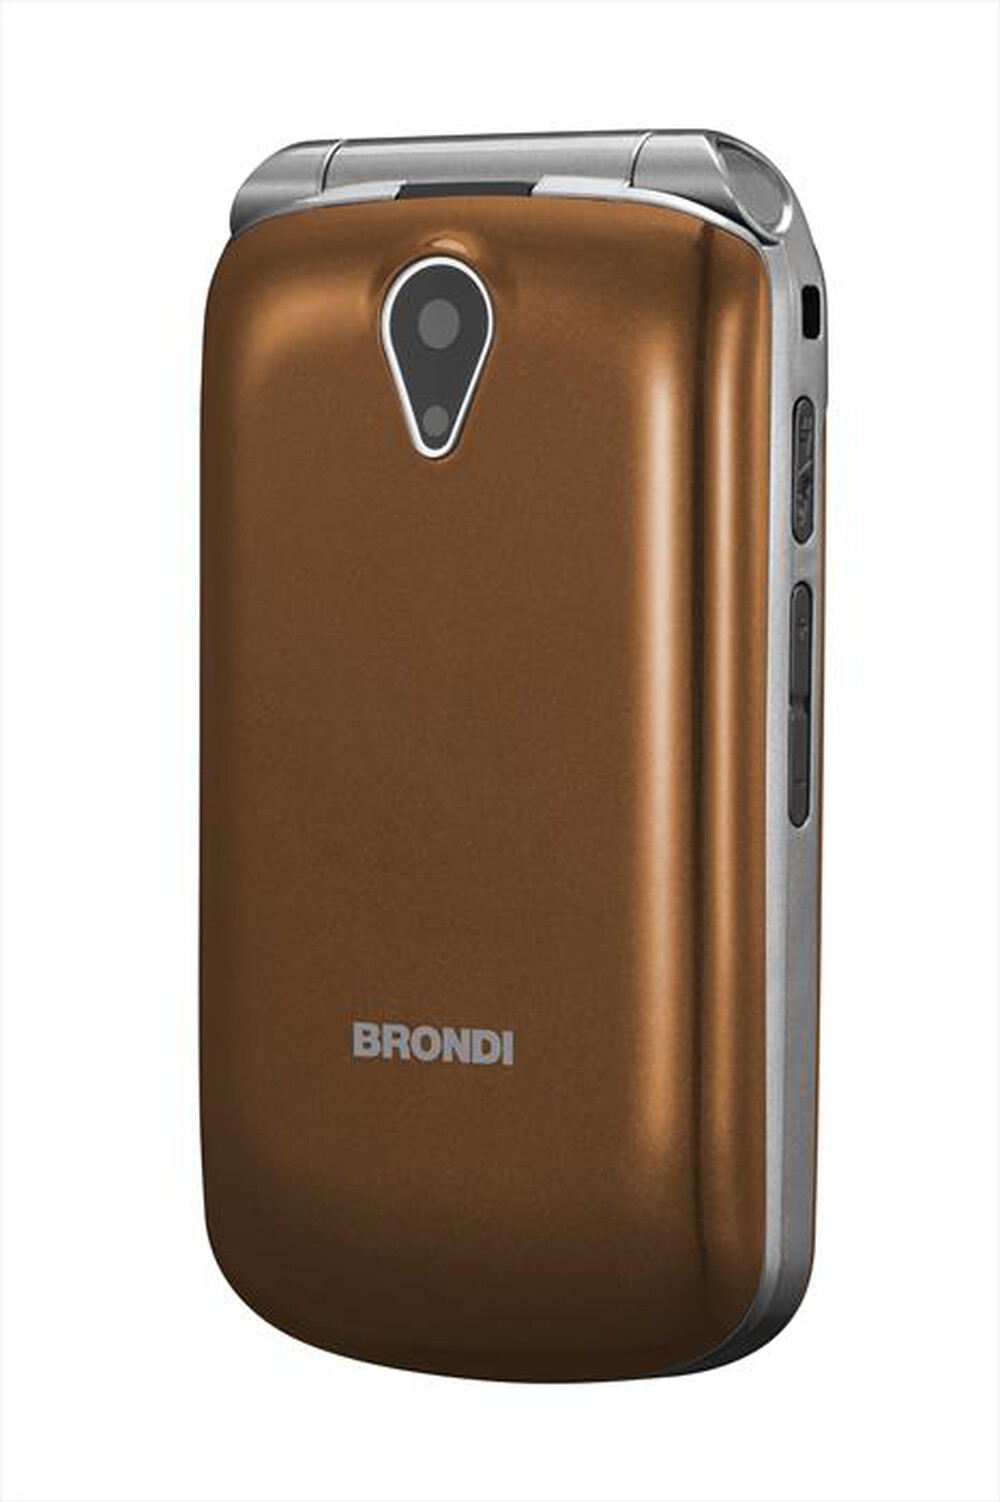 "BRONDI - Cellulare AMICO MIO 4G-BRONZE METAL"